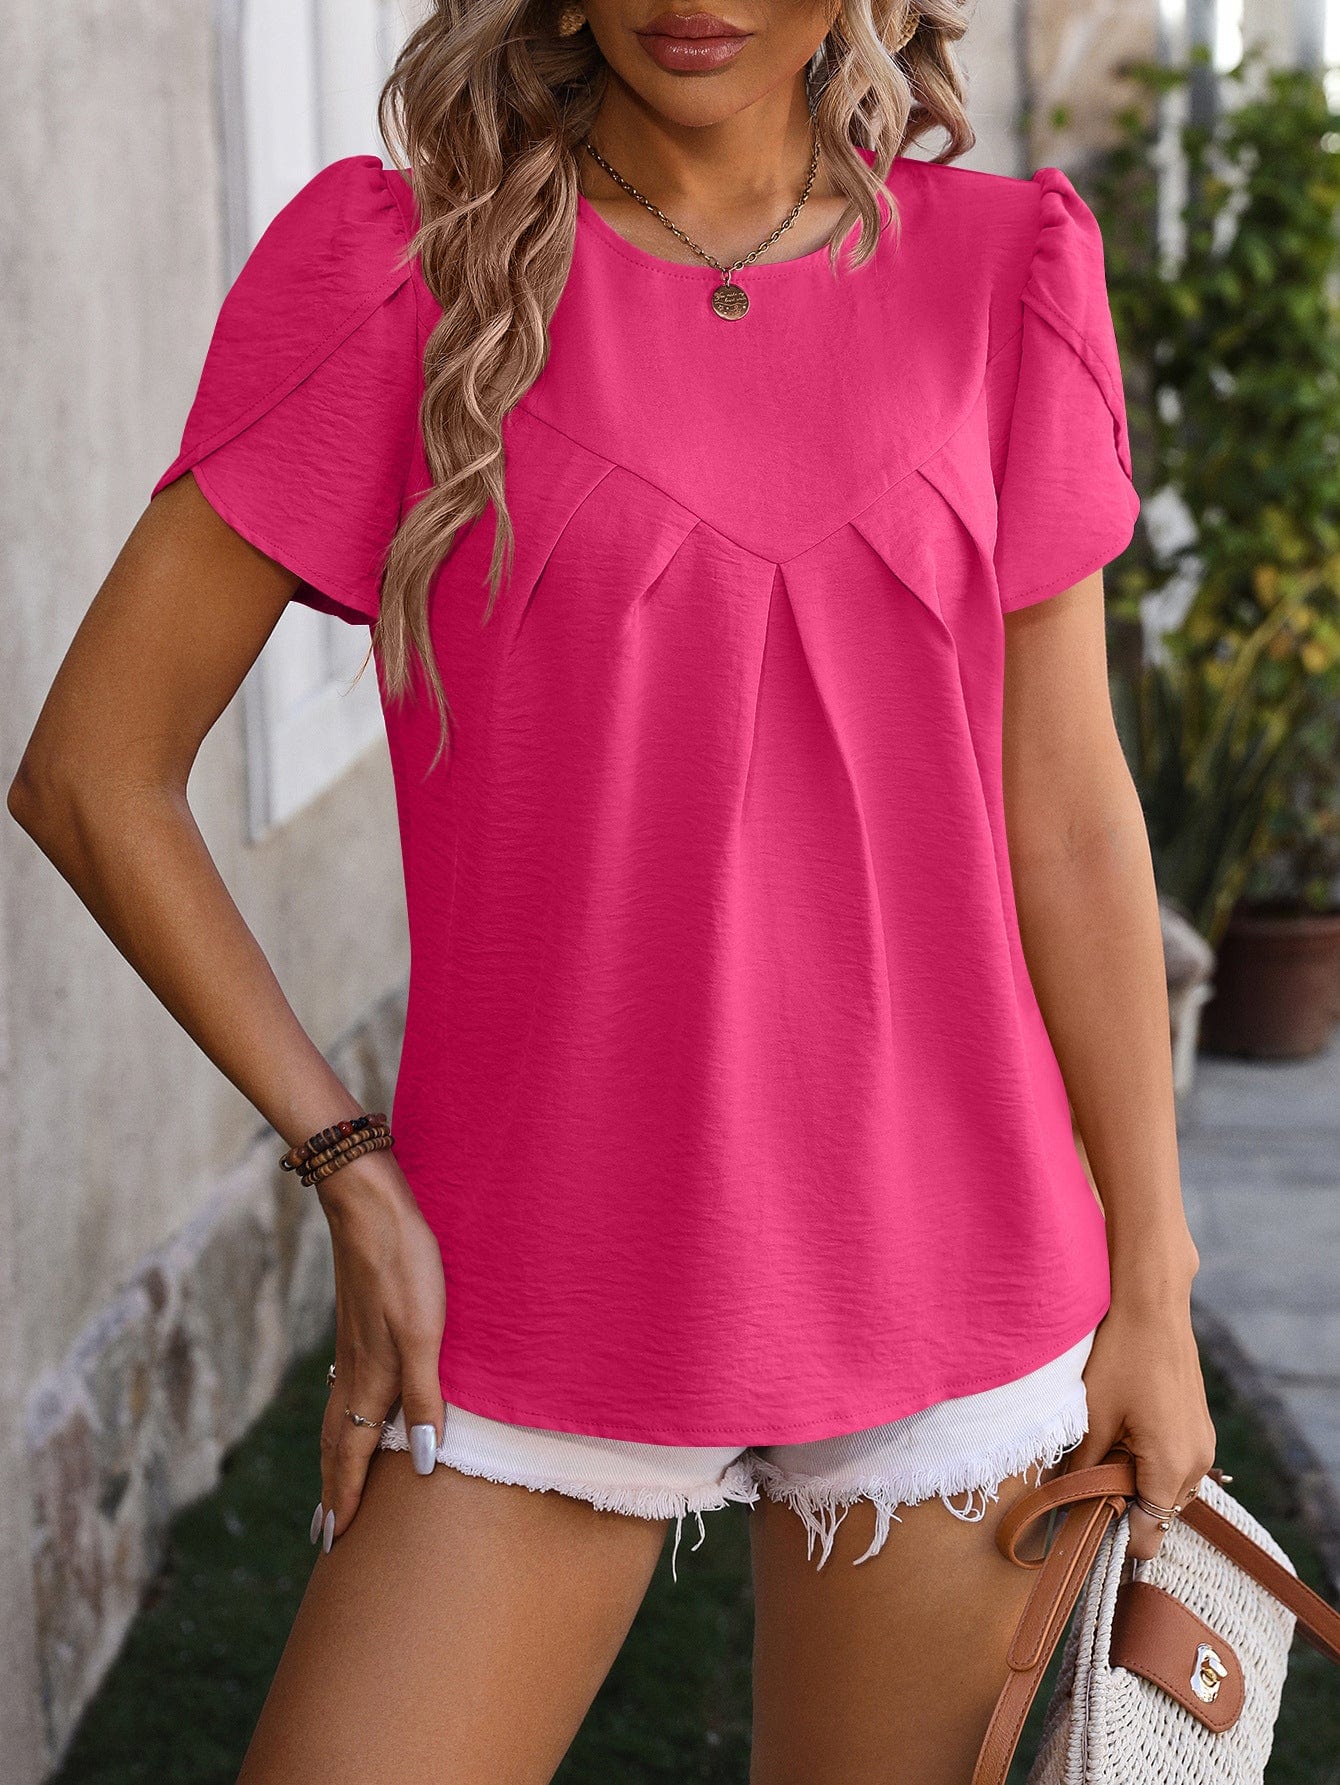 Women's leisure V-neck chiffon shirt floral puff sleeve temperament top